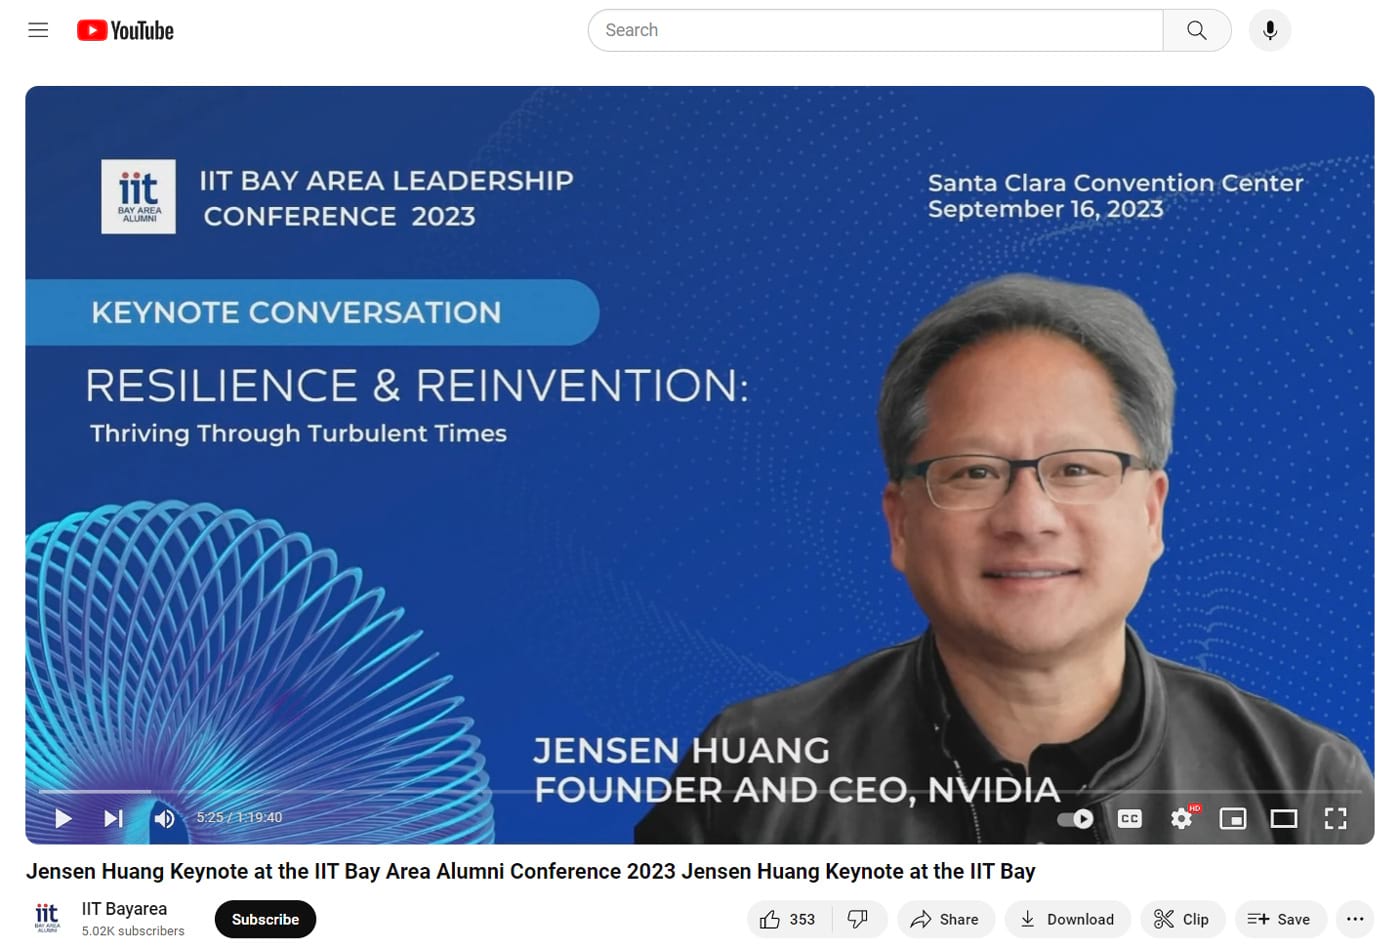 NVIDIA’s Jensen Huang keynote at a leadership conference in California’s Bay Area